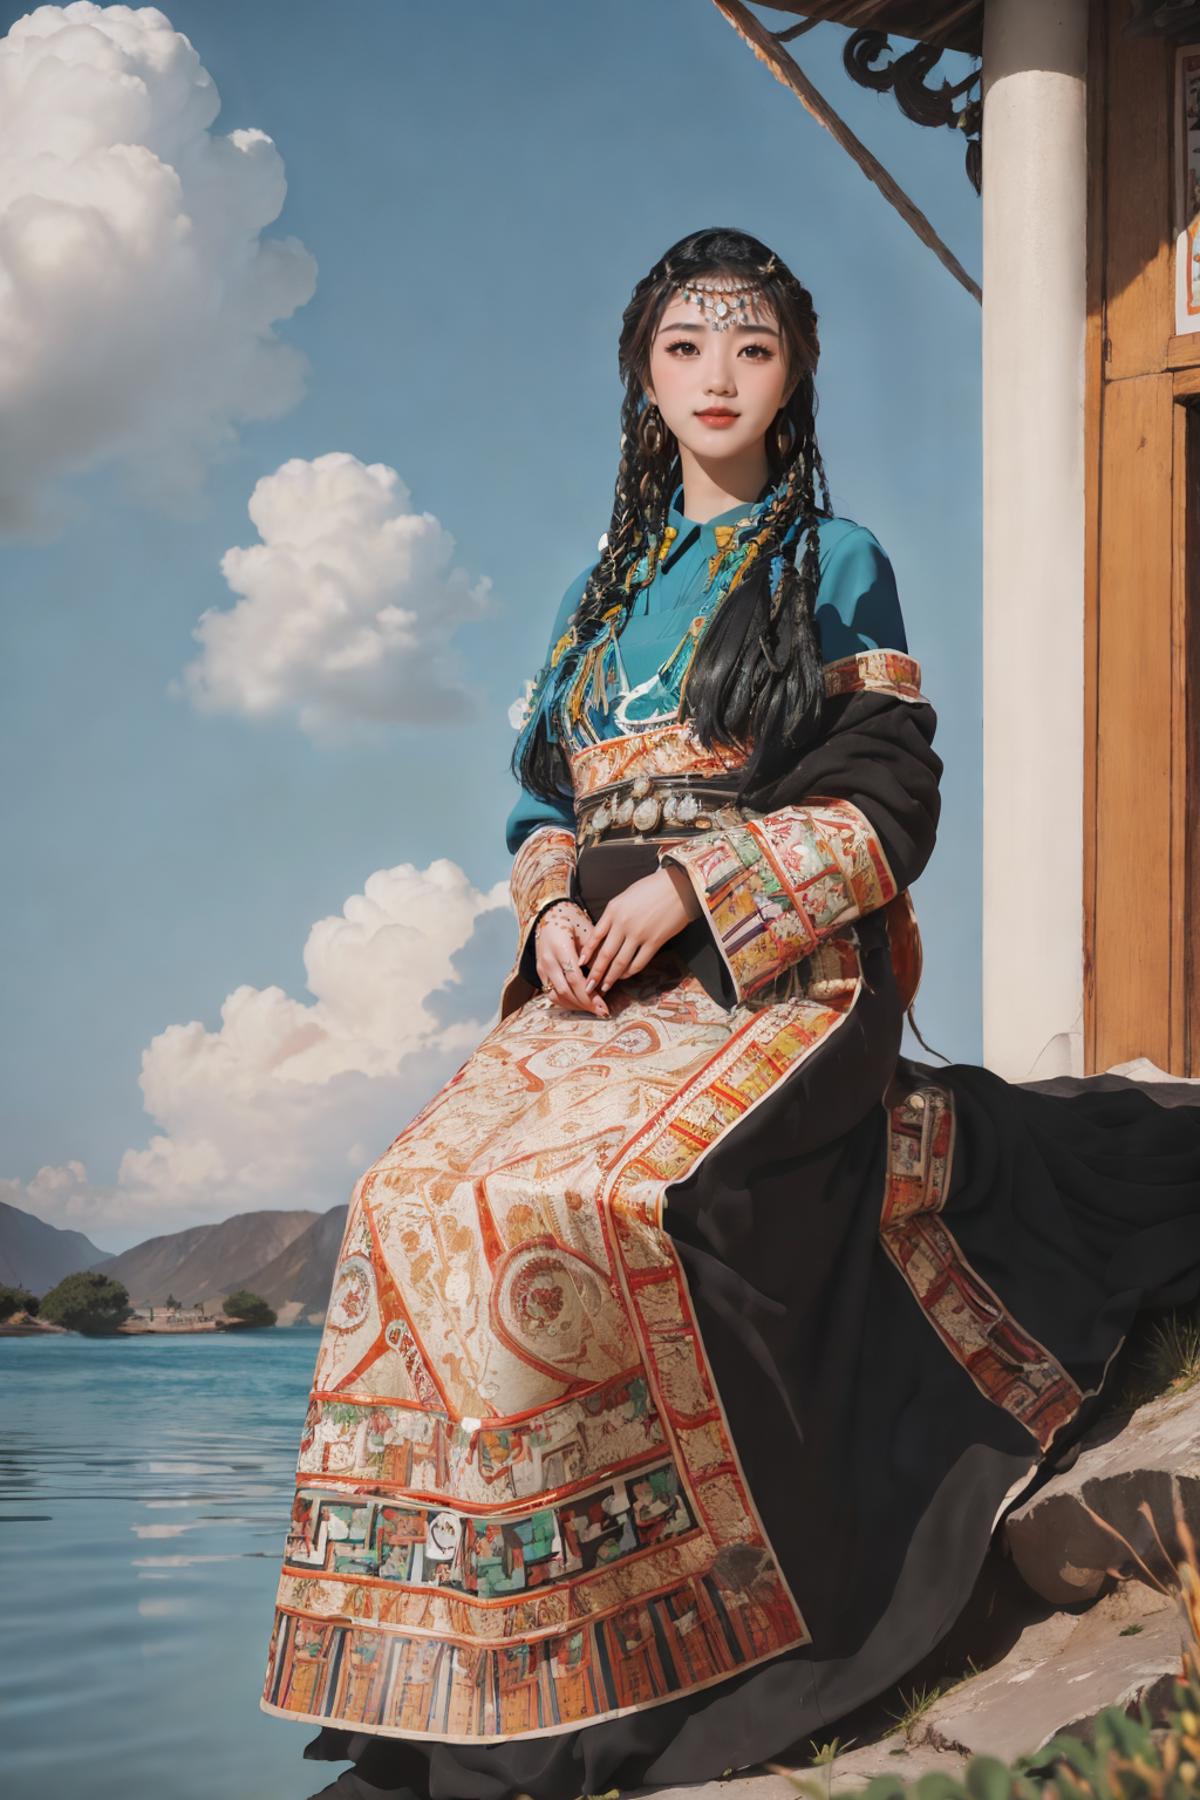 Tibetan clothing image by Darknoice